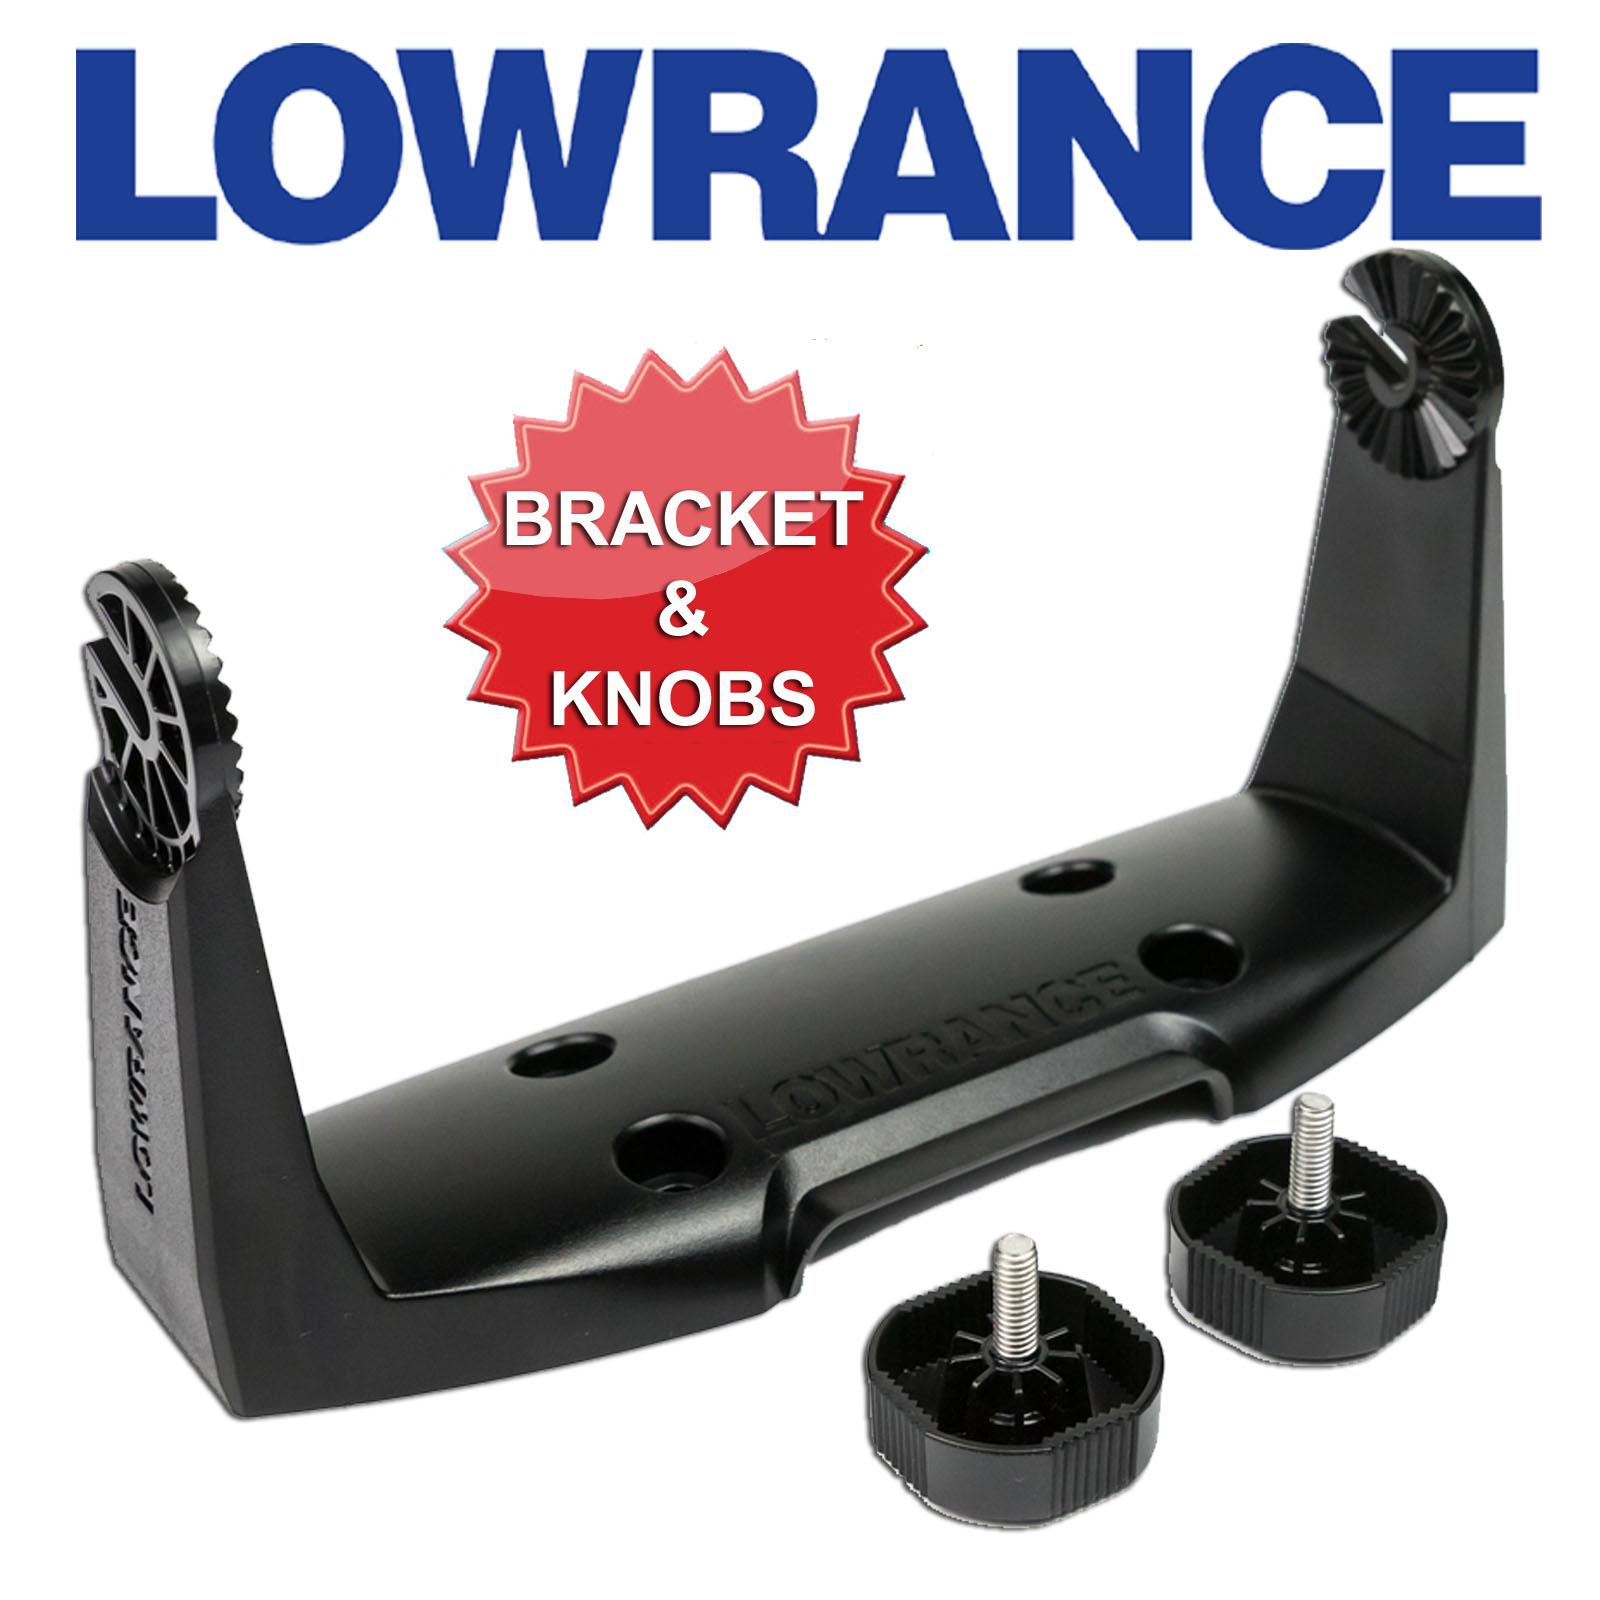 Lowrance 000-14586-001 HDS-7 Live Bracket, Black, Standard